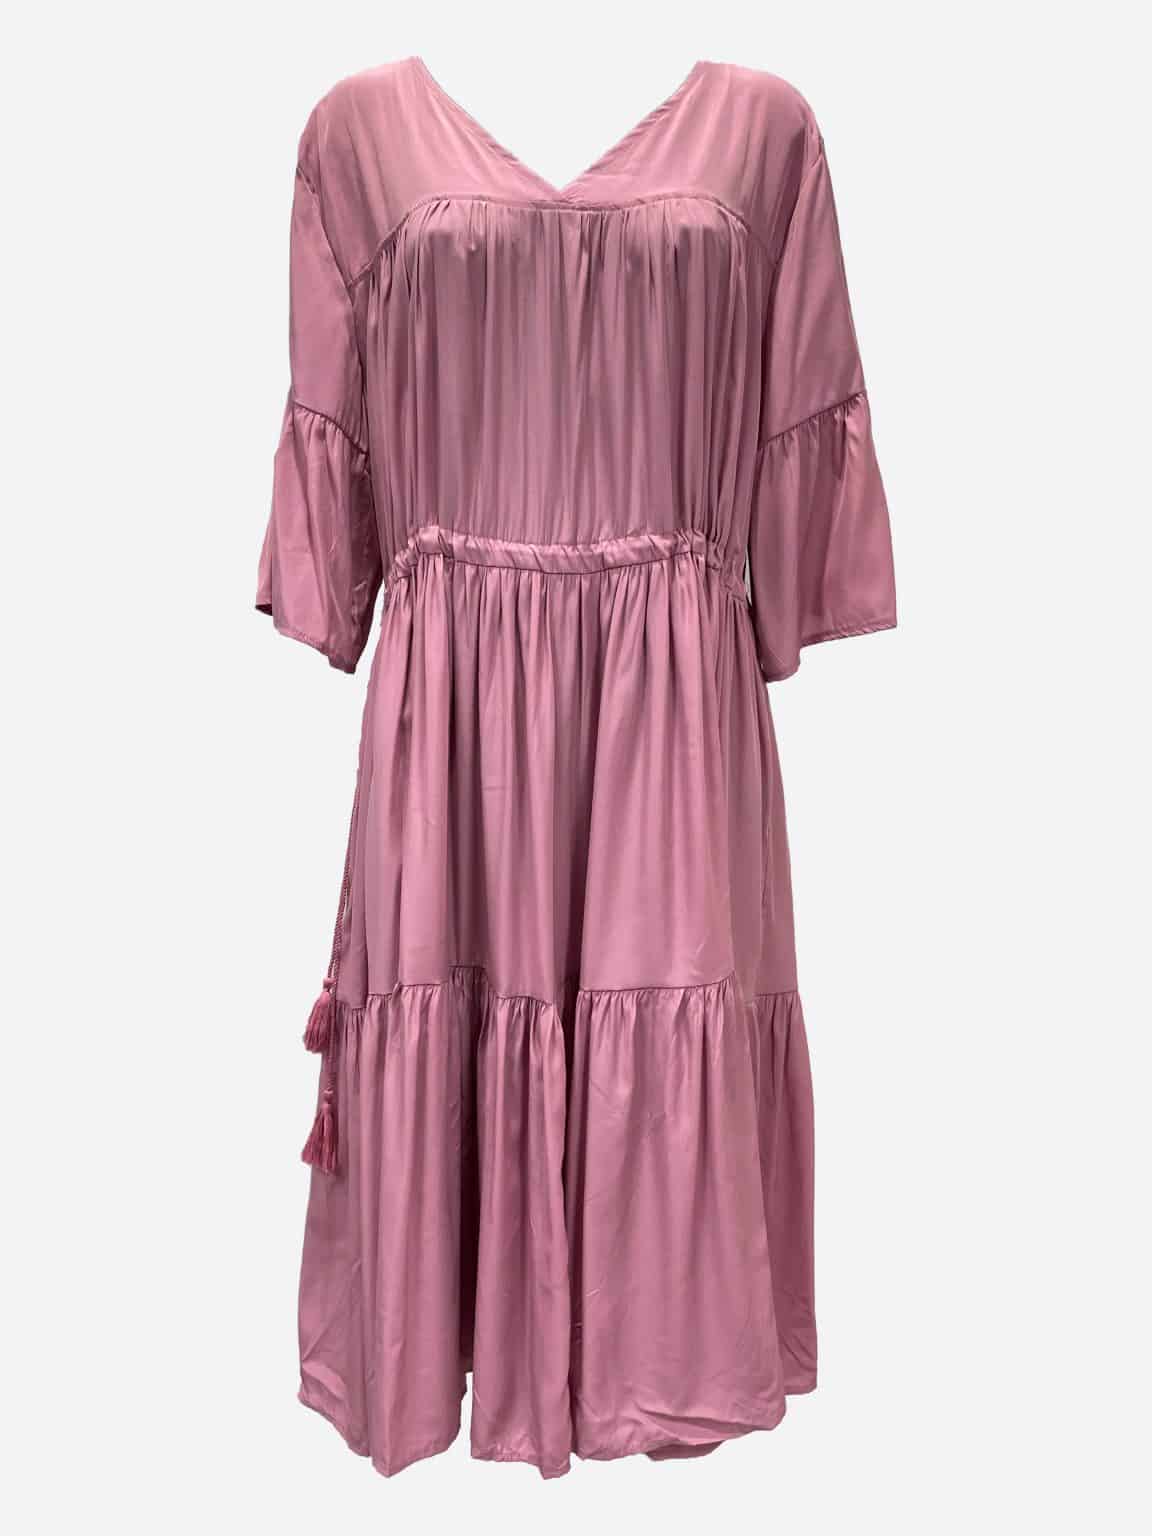 Dresses Florence Store - Women's Clothing Australia